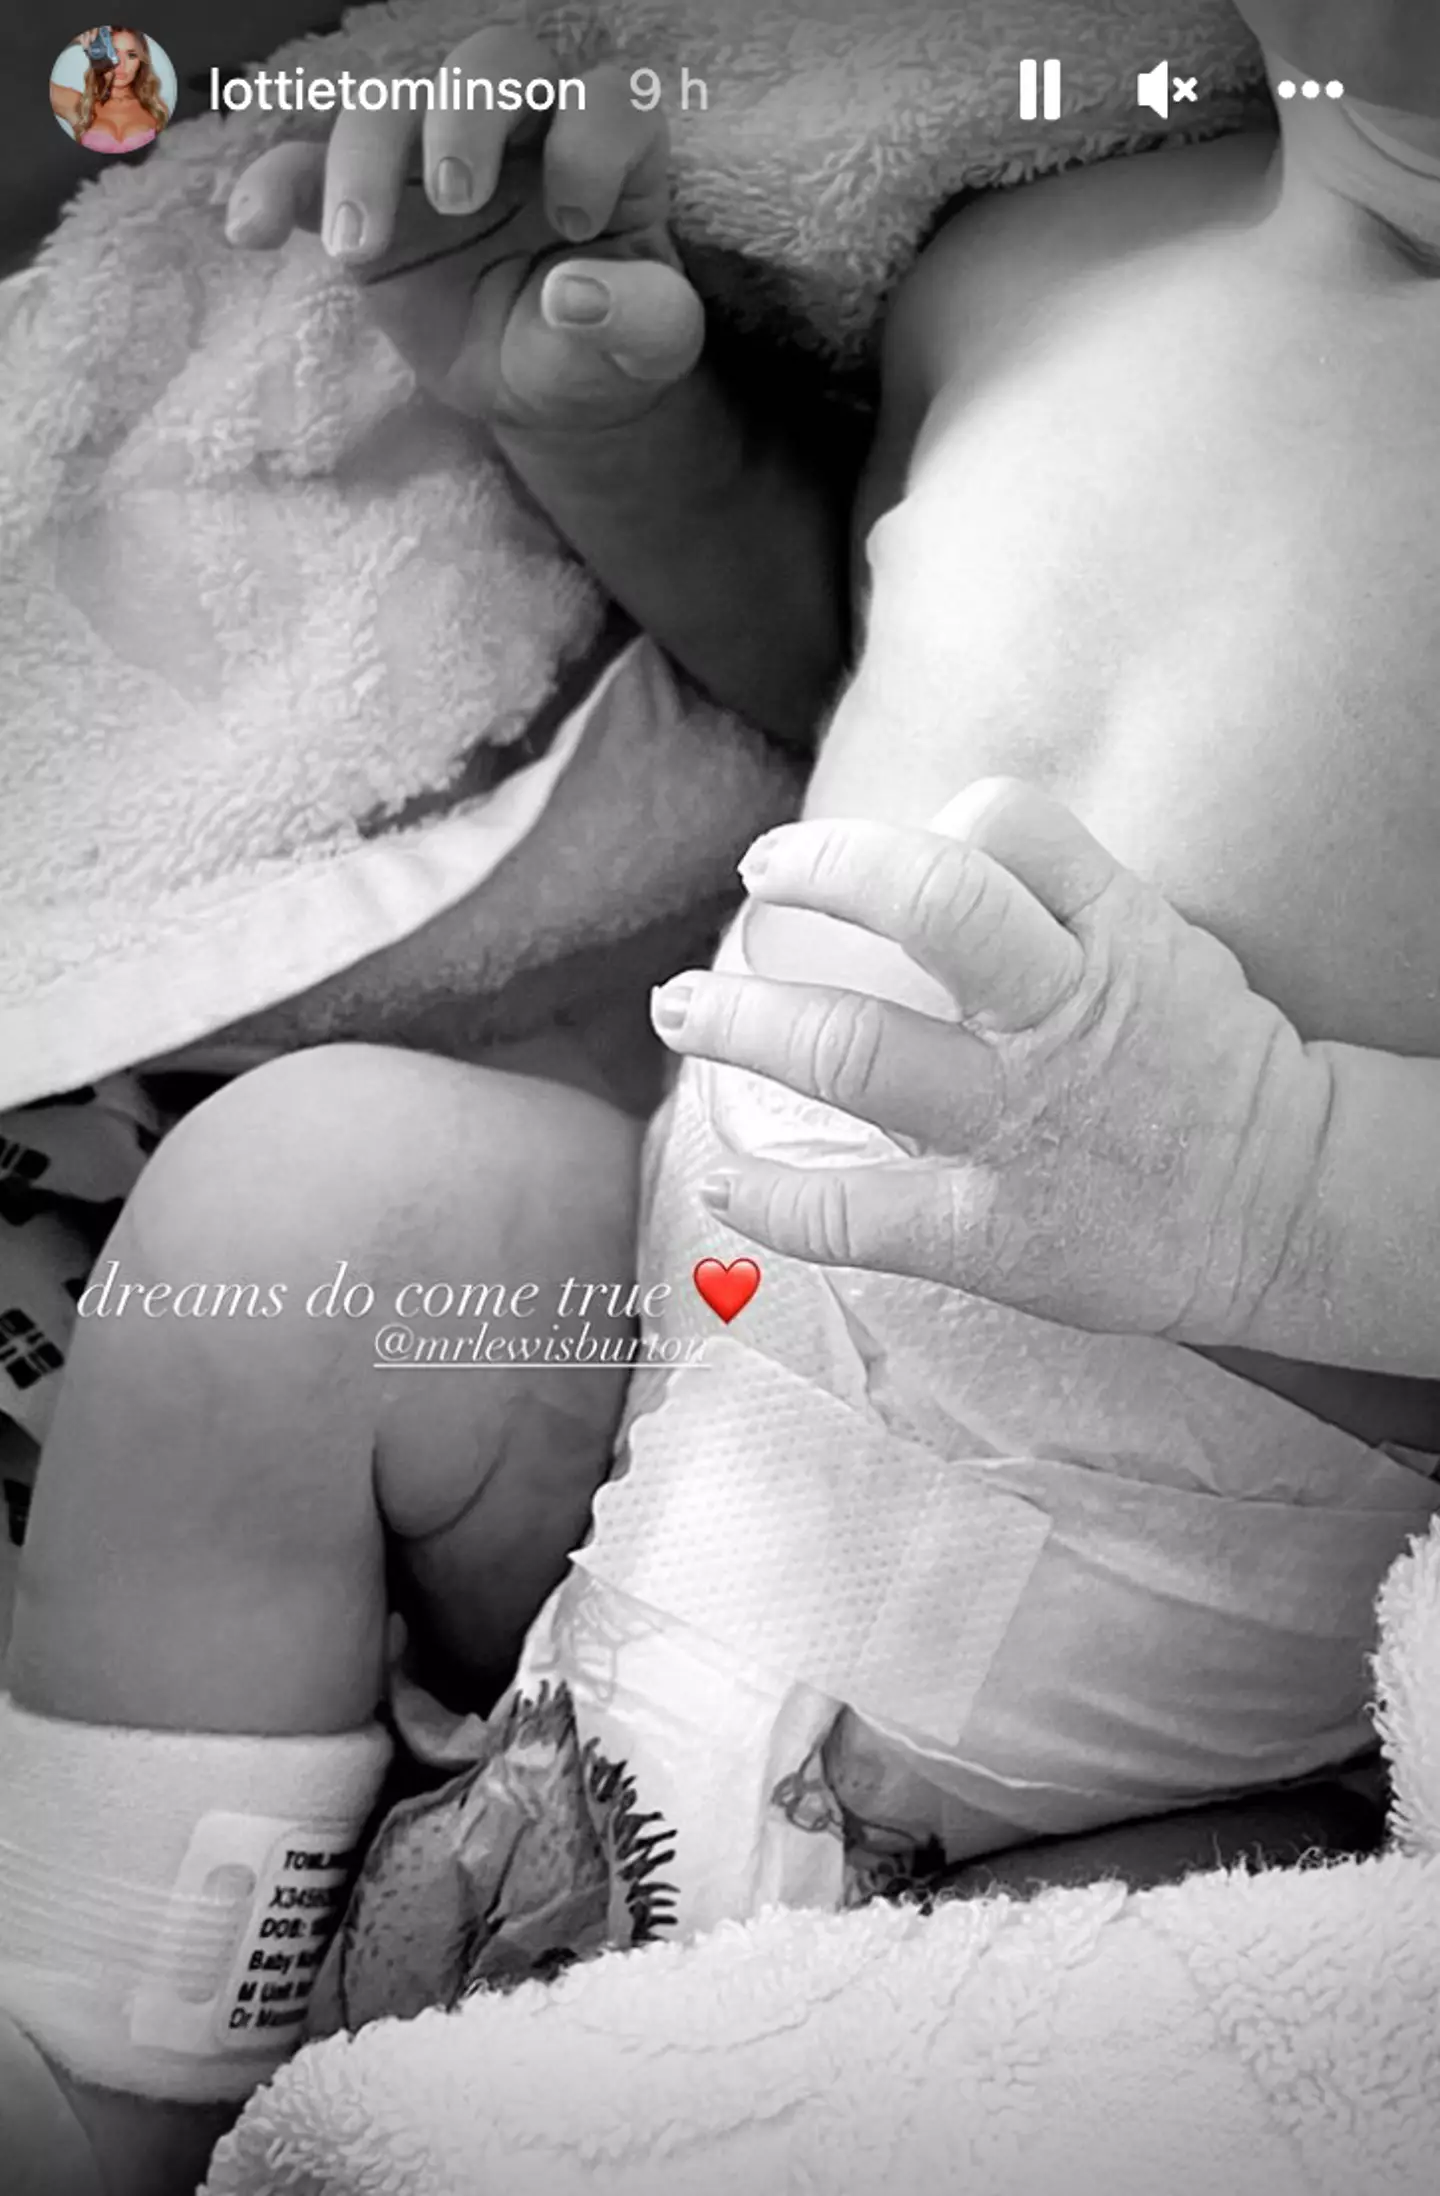 Lottie shared a sweet Instagram Story of the newborn.